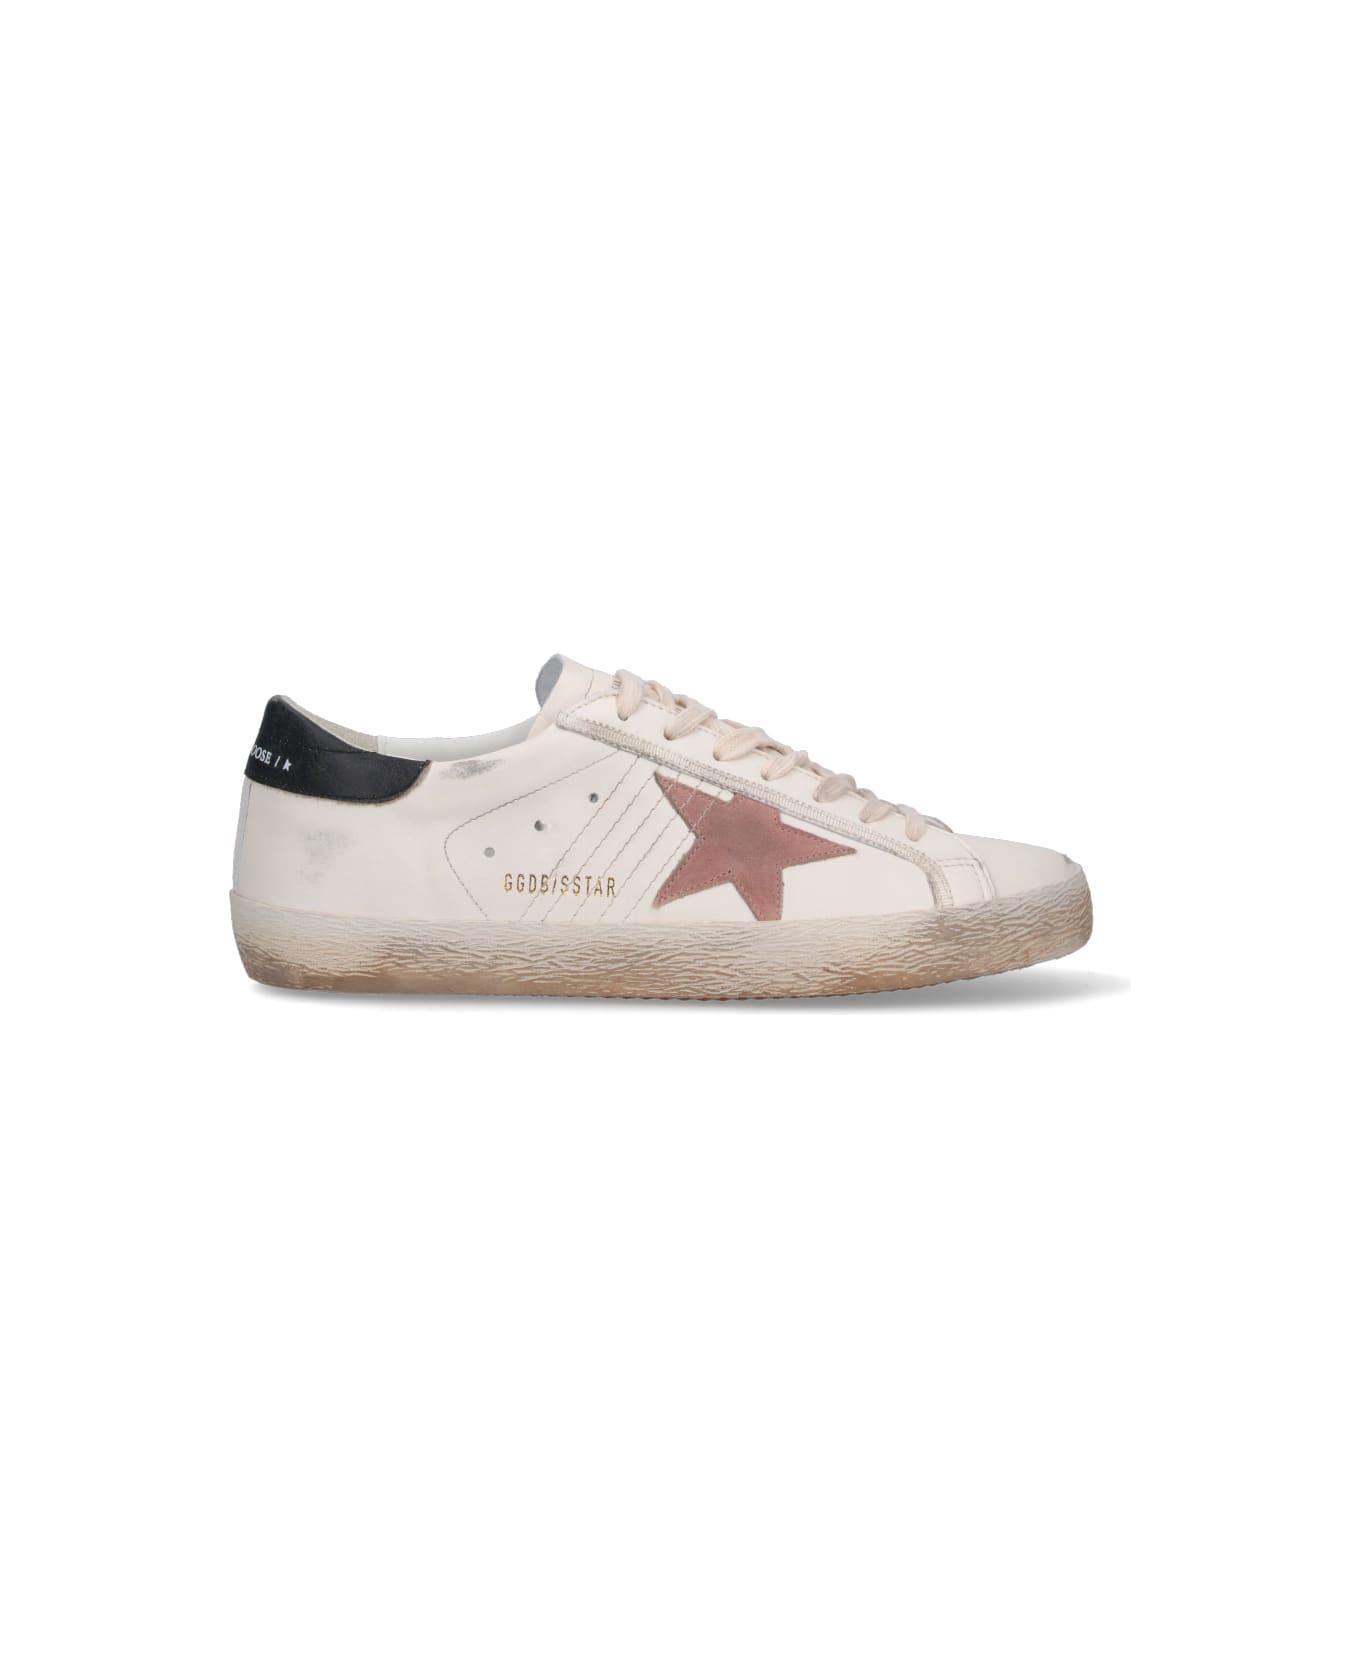 Golden Goose "superstar" Low Sneakers - White